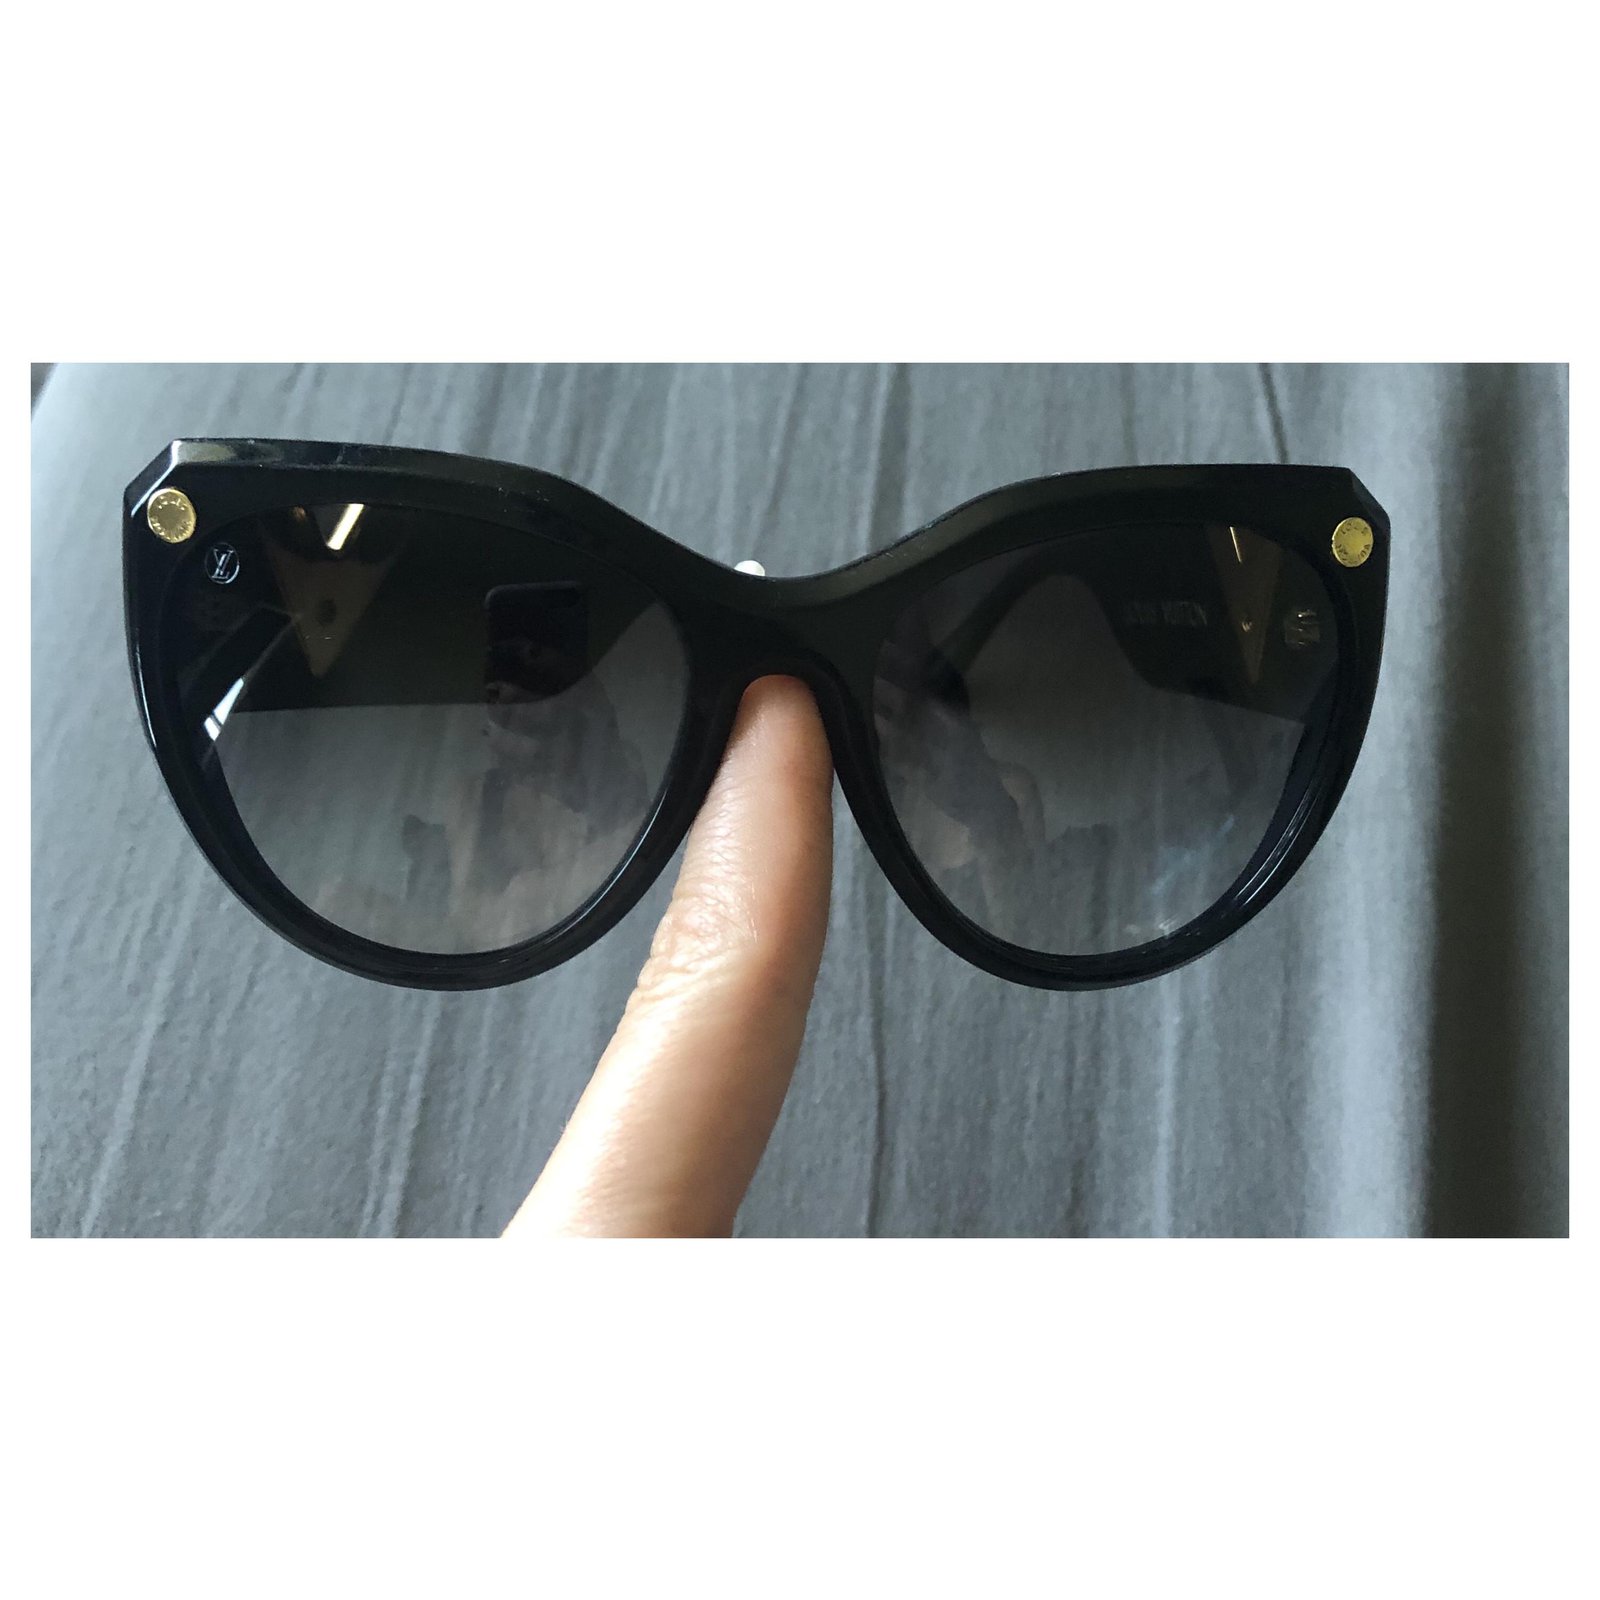 Louis Vuitton My Fair Lady Sunglasses 2020